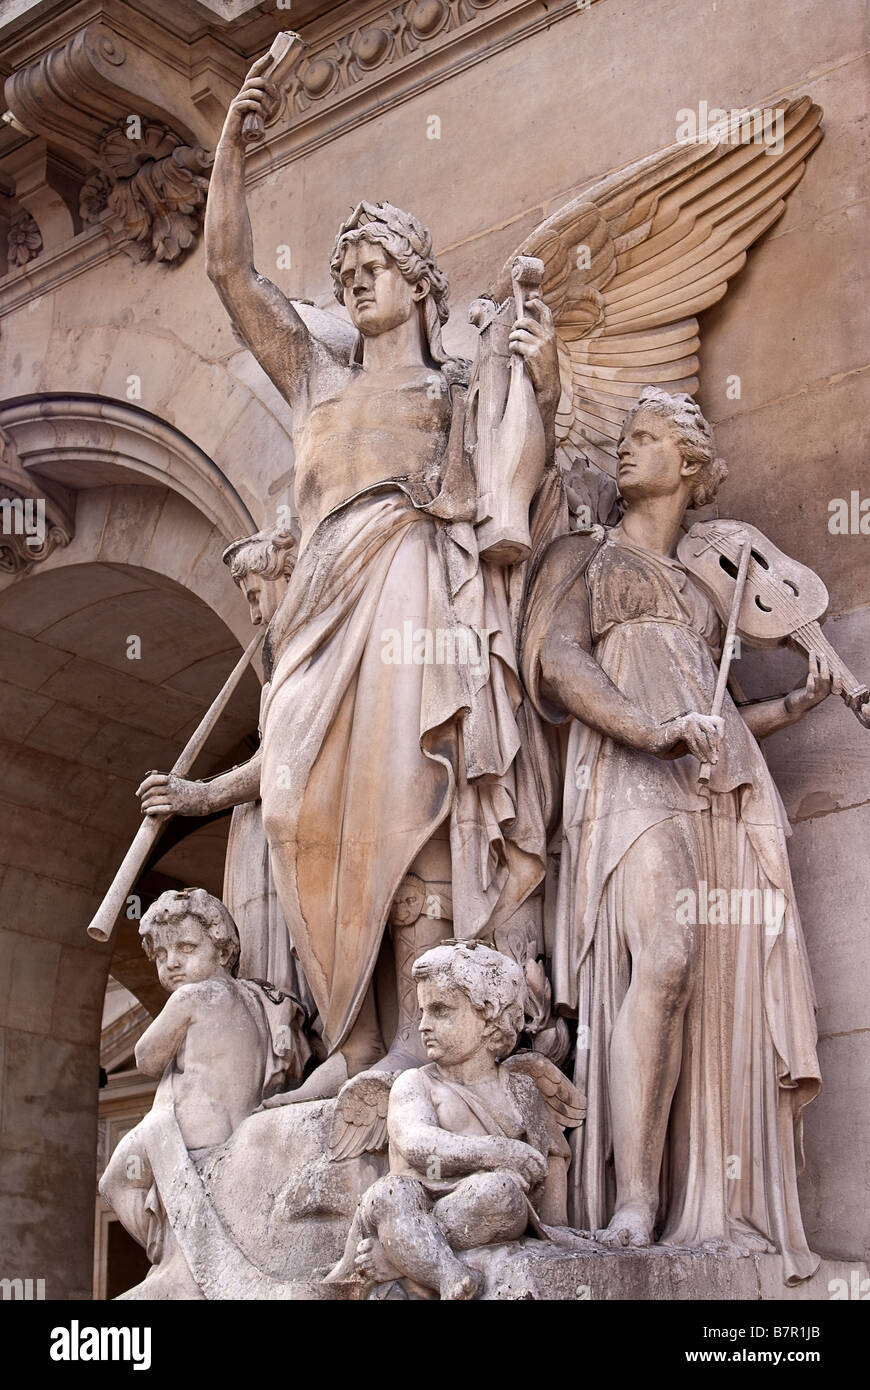 Paris France Opera House statue carvings Stock Photo